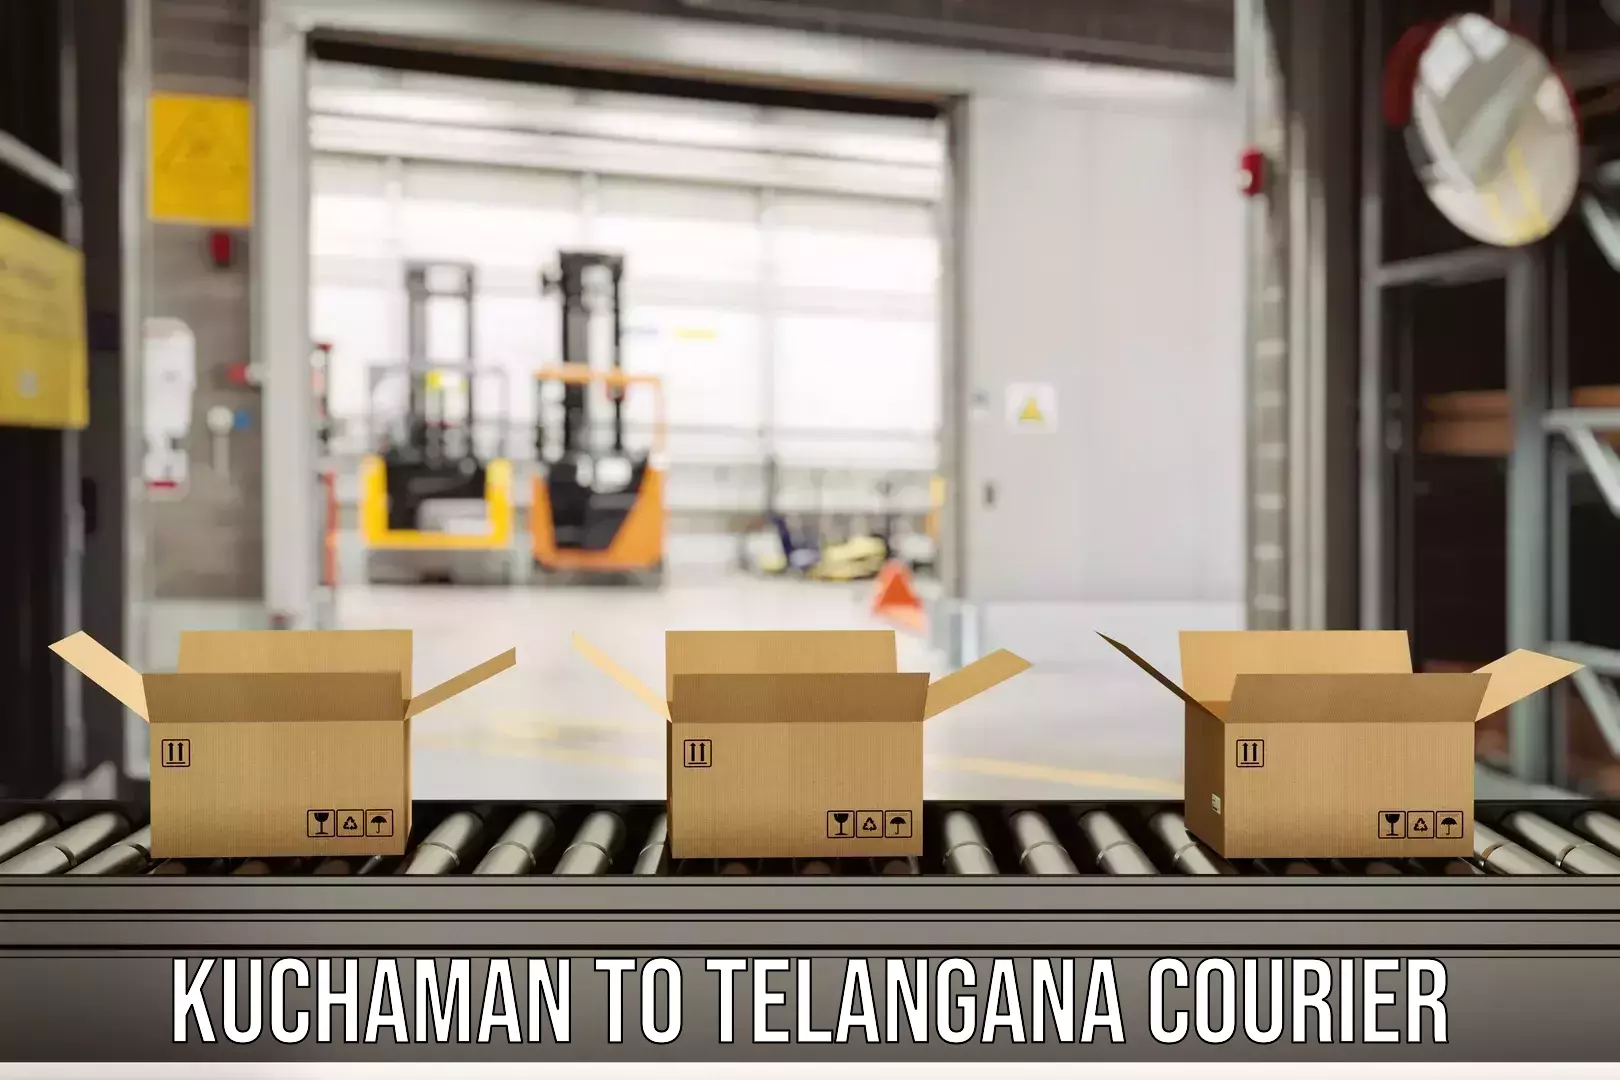 Logistics and distribution Kuchaman to Sikanderguda